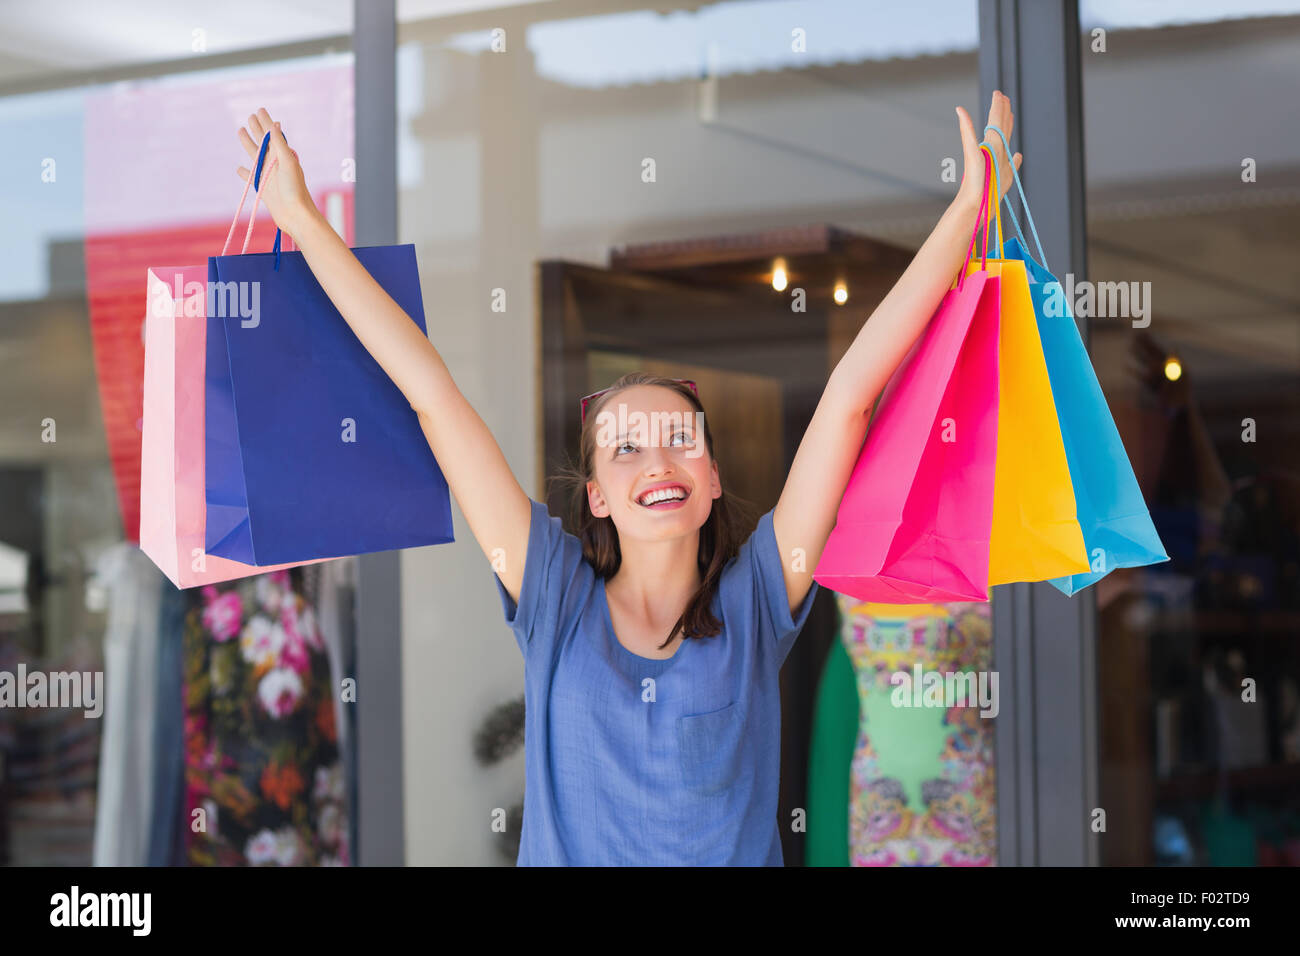 Energetic woman handing shopping bags Stock Photo